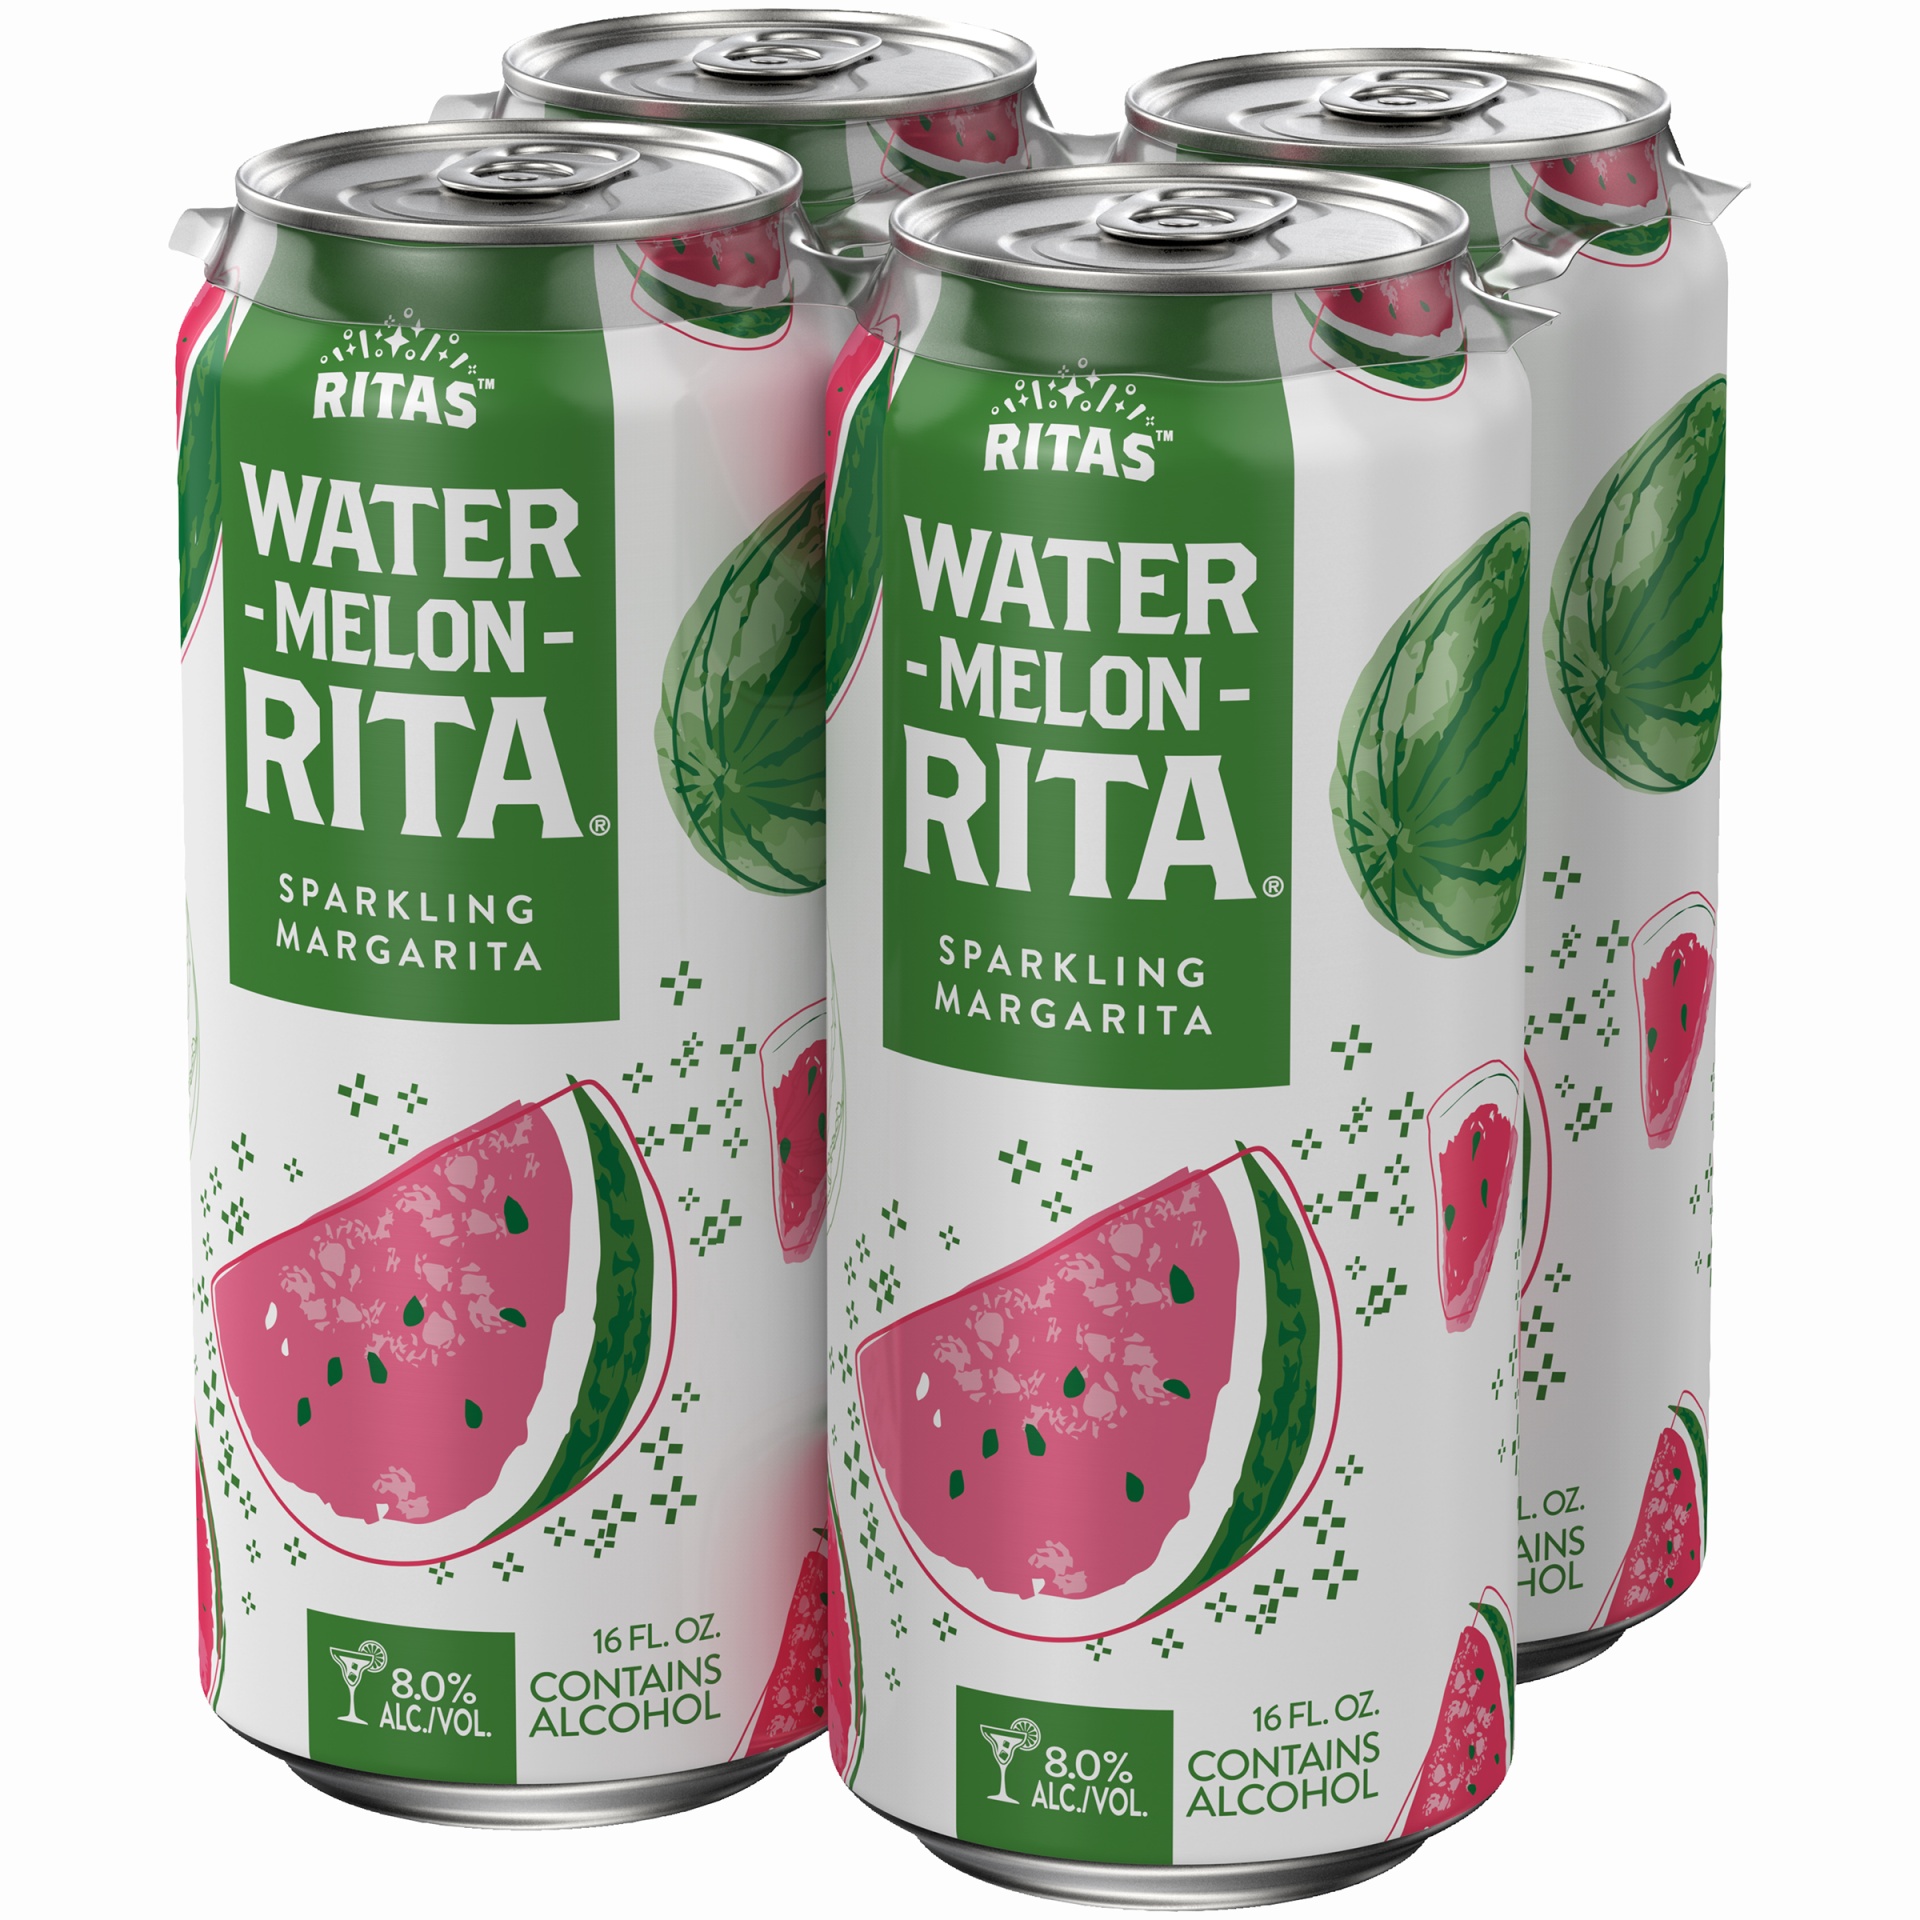 slide 3 of 3, Ritas Water-Melon-Rita Sparkling Margarita, 8% ABV, 16 oz cans